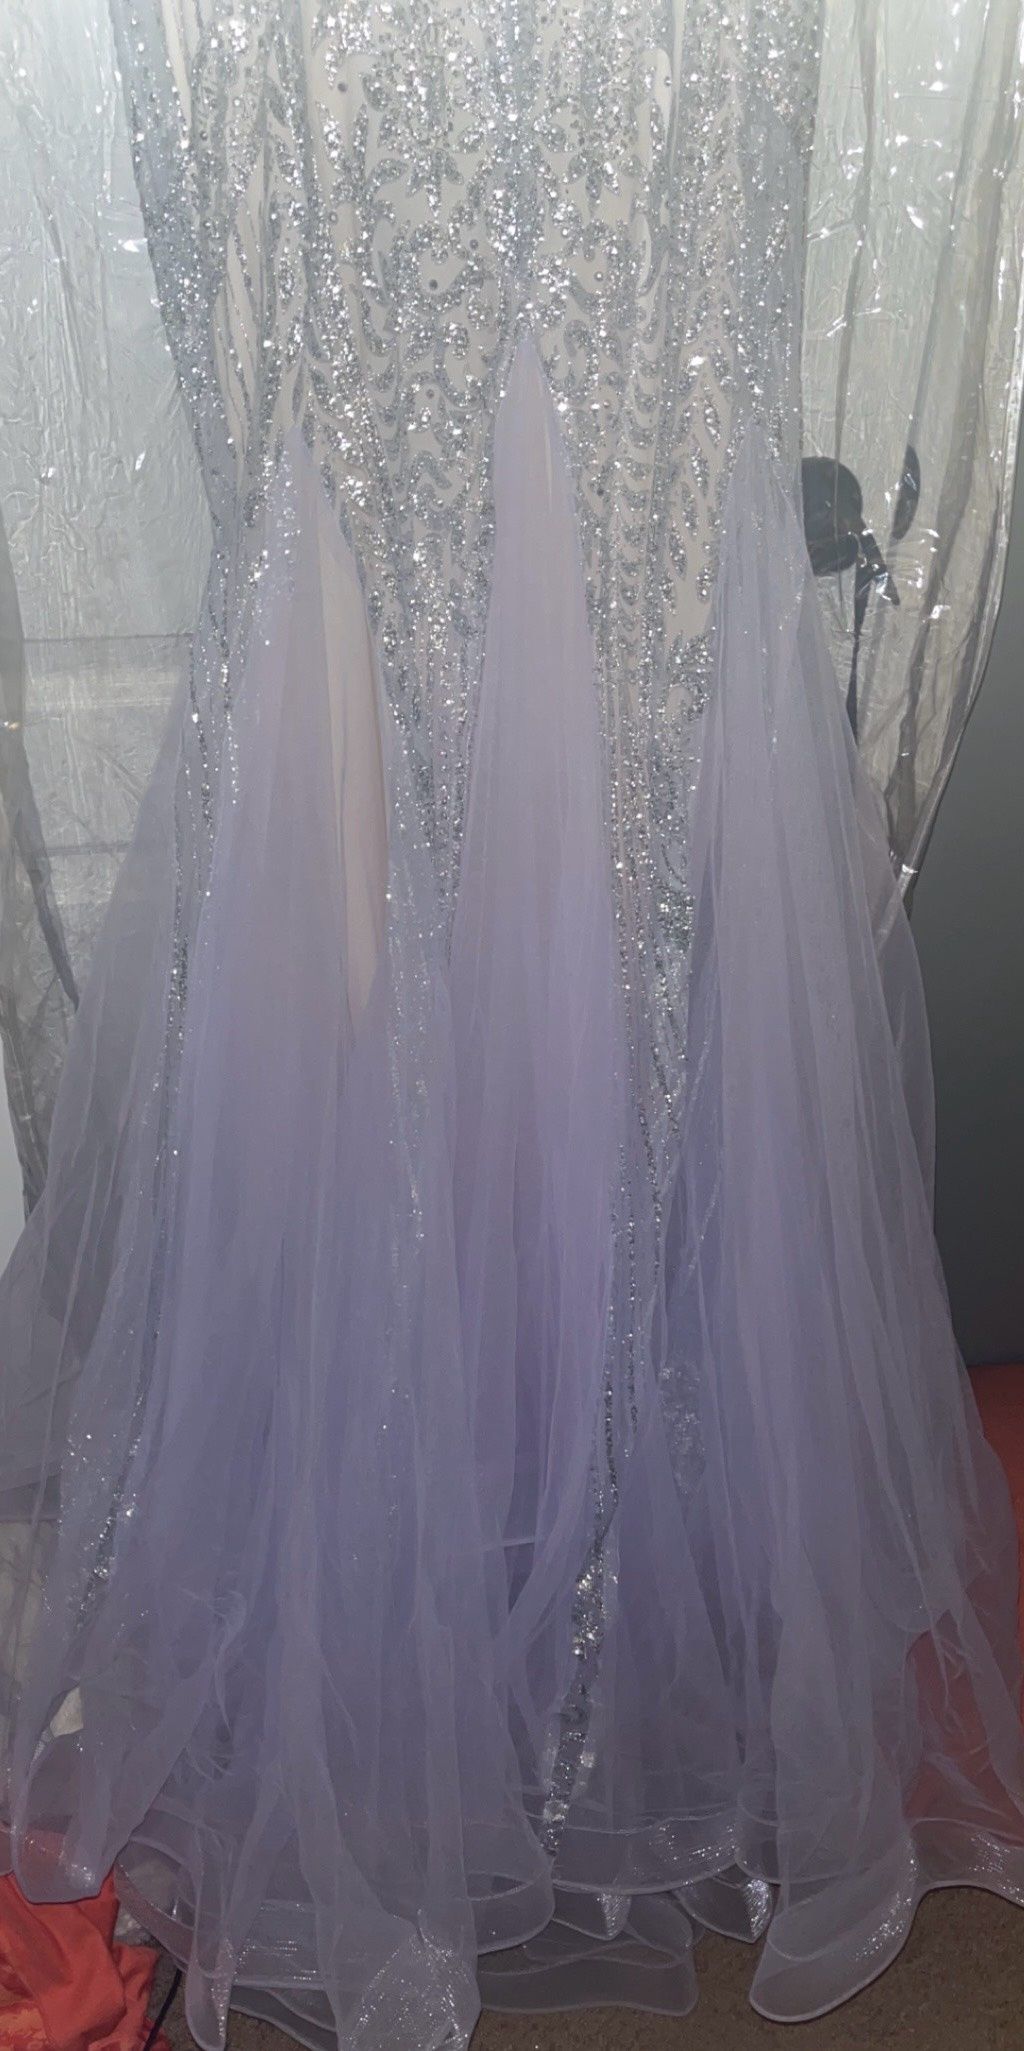 Elizabeth K by GLS Size M Prom Plunge Multicolor Mermaid Dress on Queenly